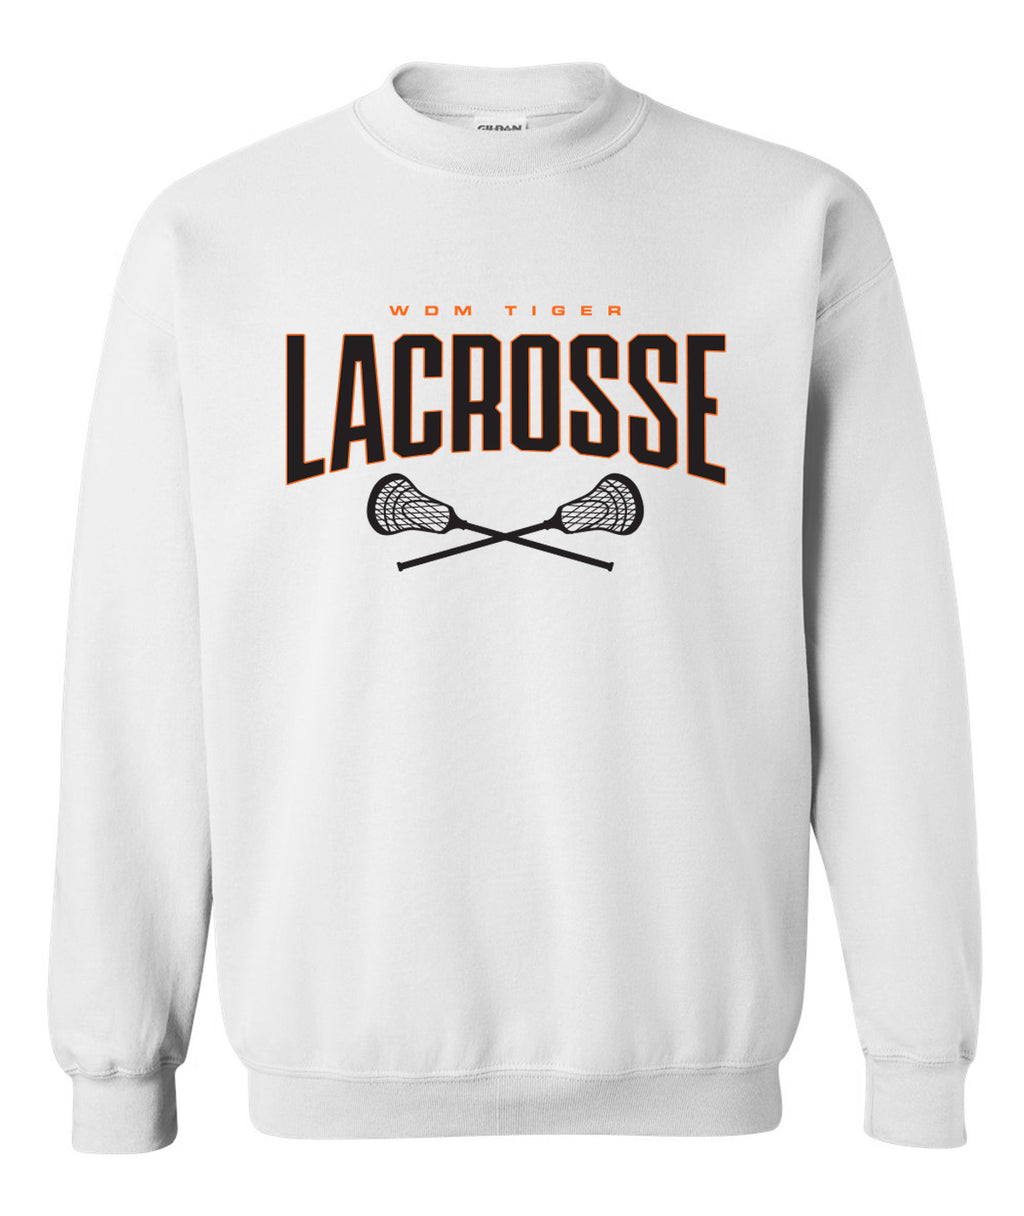 WDM Tiger Lacrosse Crewneck Sweatshirt